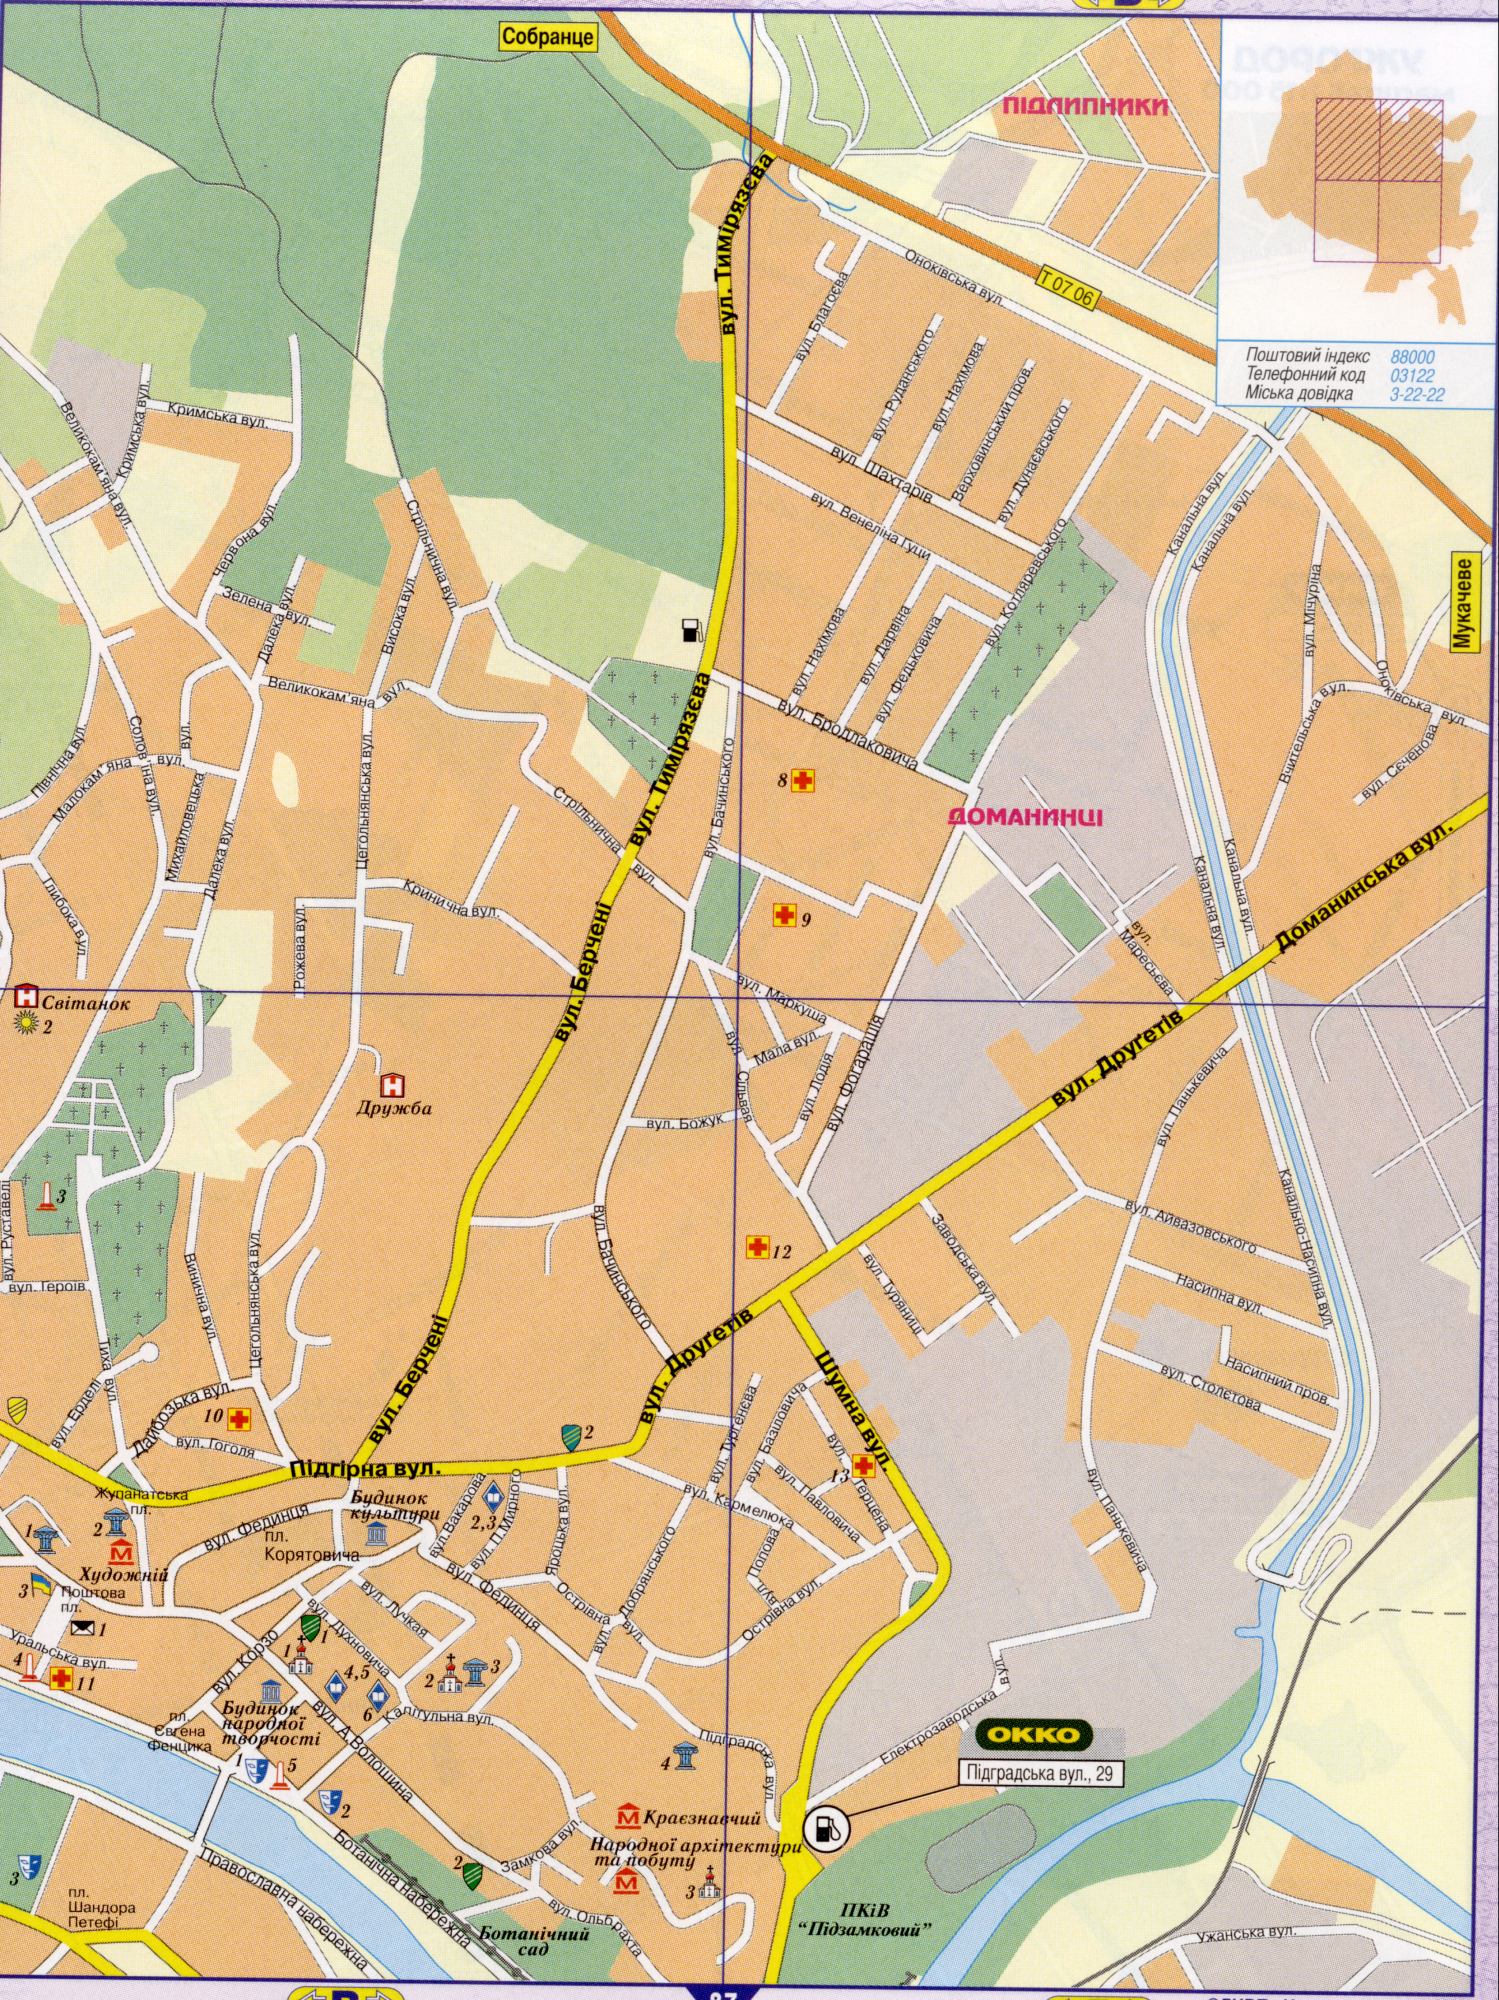 Map of Uzhhorod detailed (Ukraine map of Uzhgorod) in 1 cm 150 meters. Download a detailed map of highways, B0